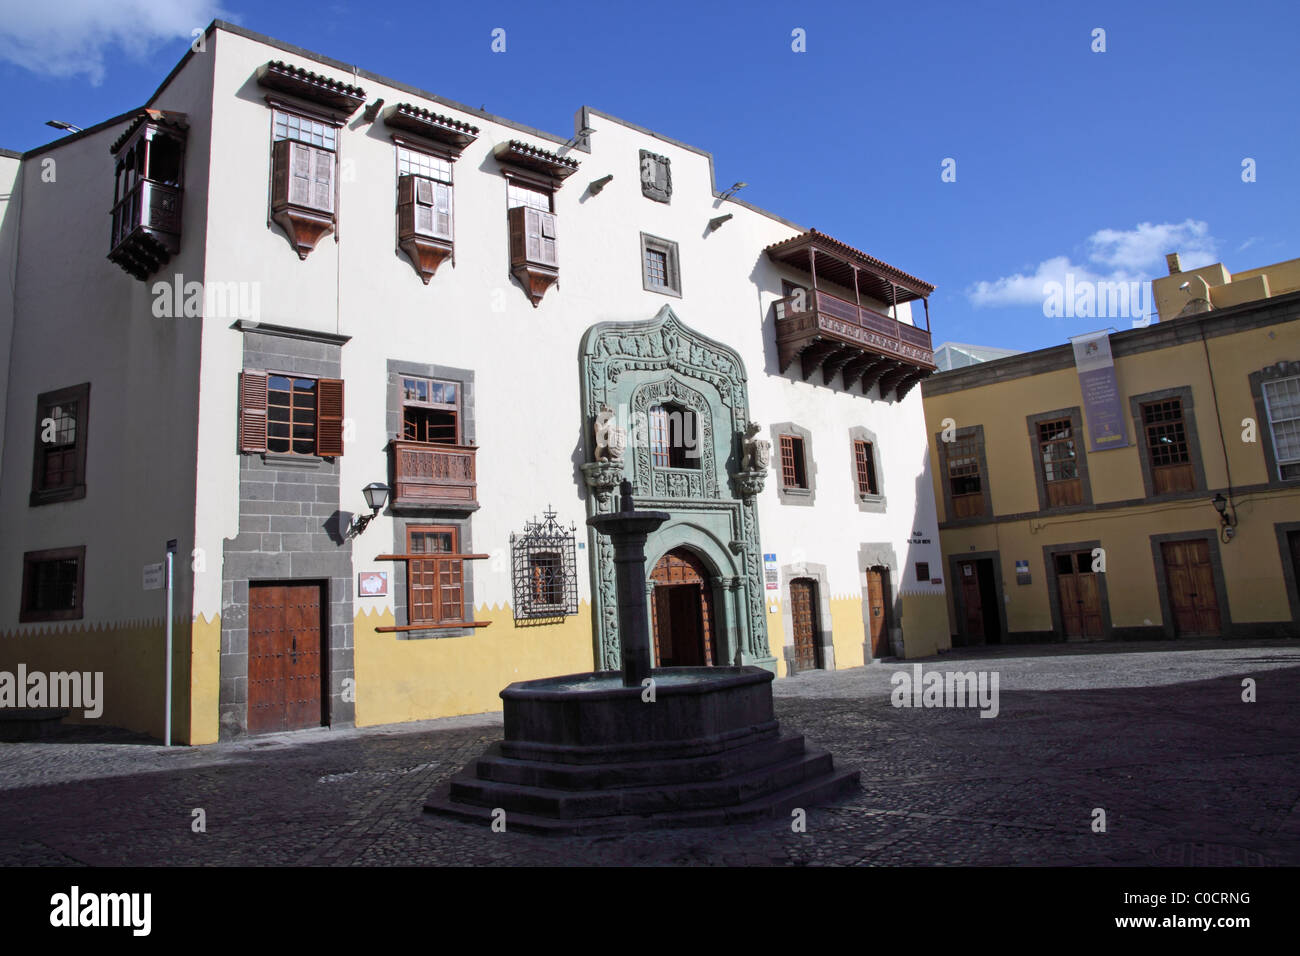 La Casa de Colon - Columbus' House - Las Palmas Canary Islands Stock Photo